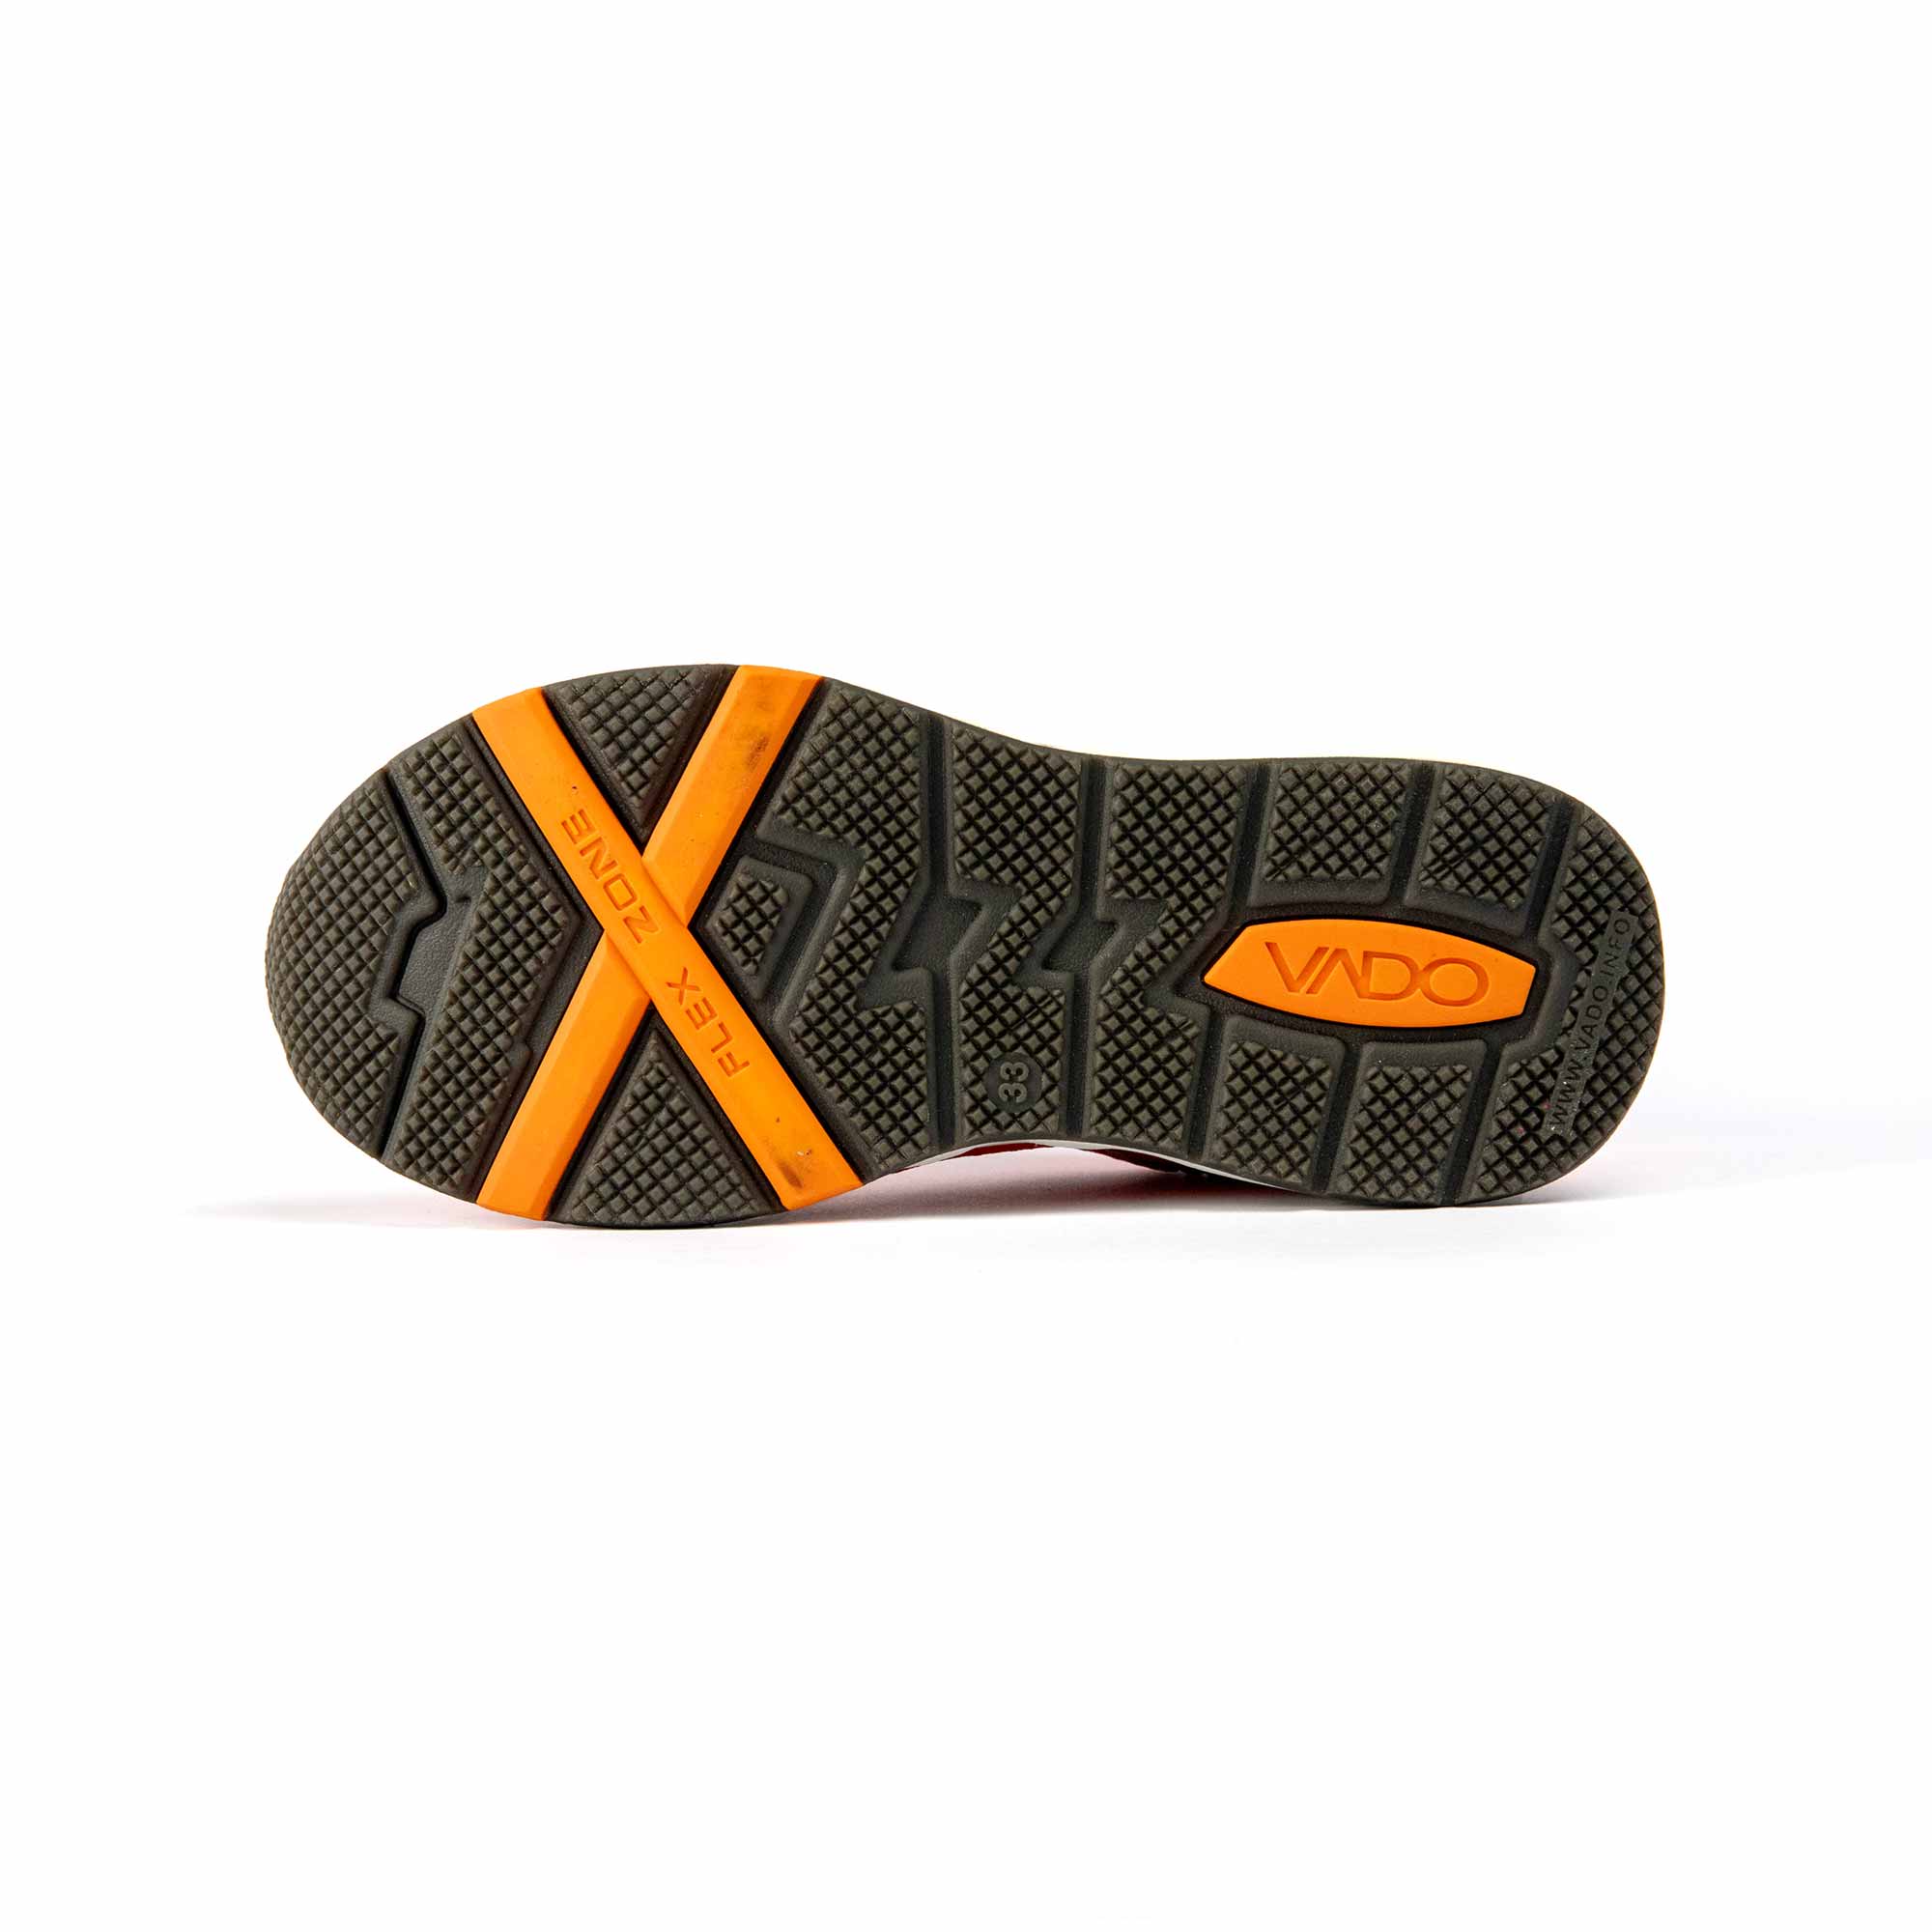 VADO Komfort Kinder Sneaker AIR Lo Boa Goretex Surround orange Schuhsohle